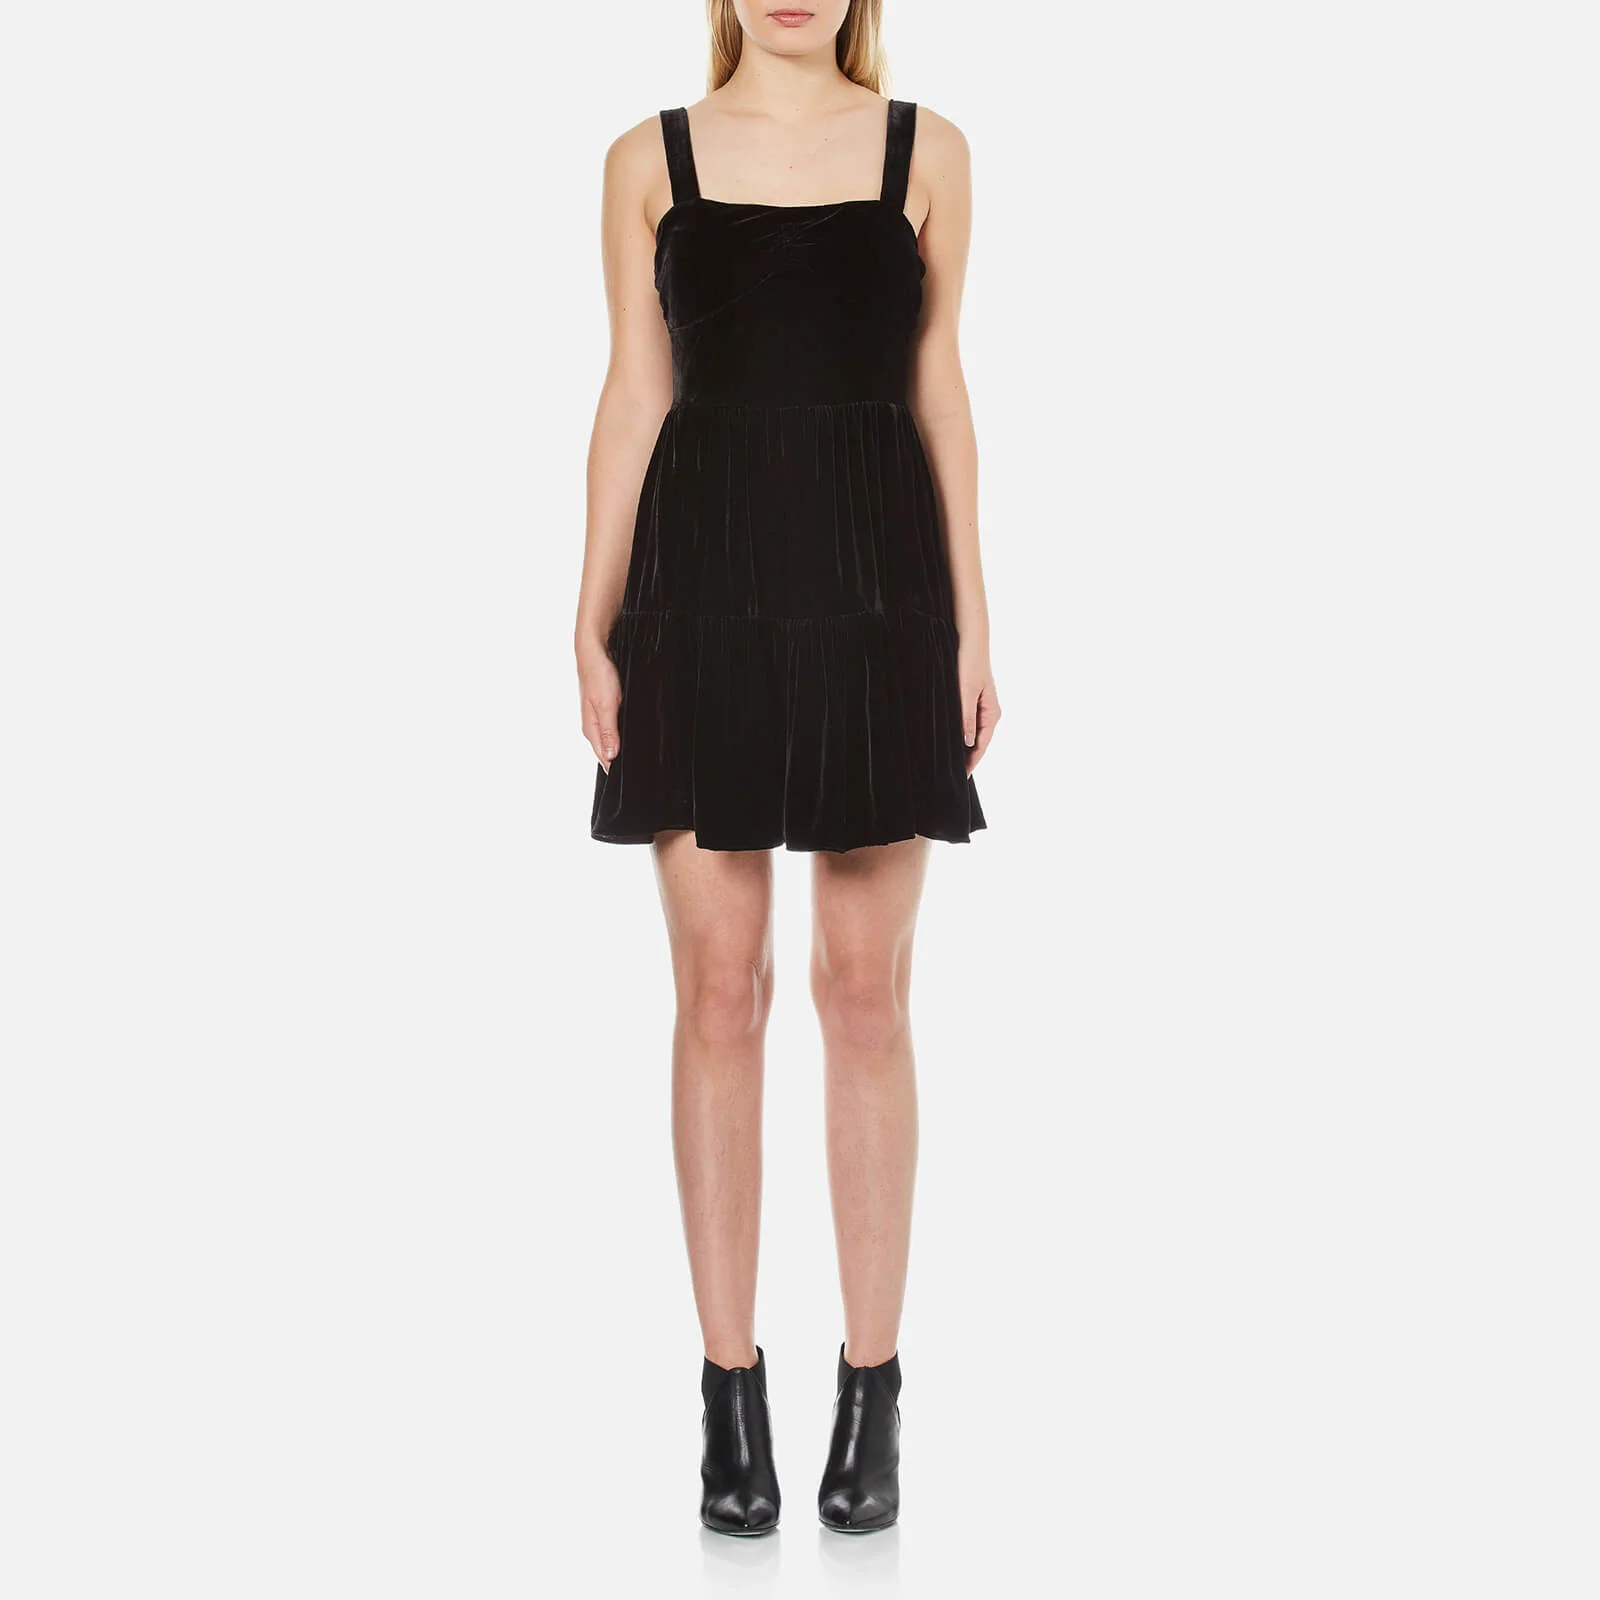 McQ Alexander McQueen Women's Short Gath Panel Dress - Black Image 1